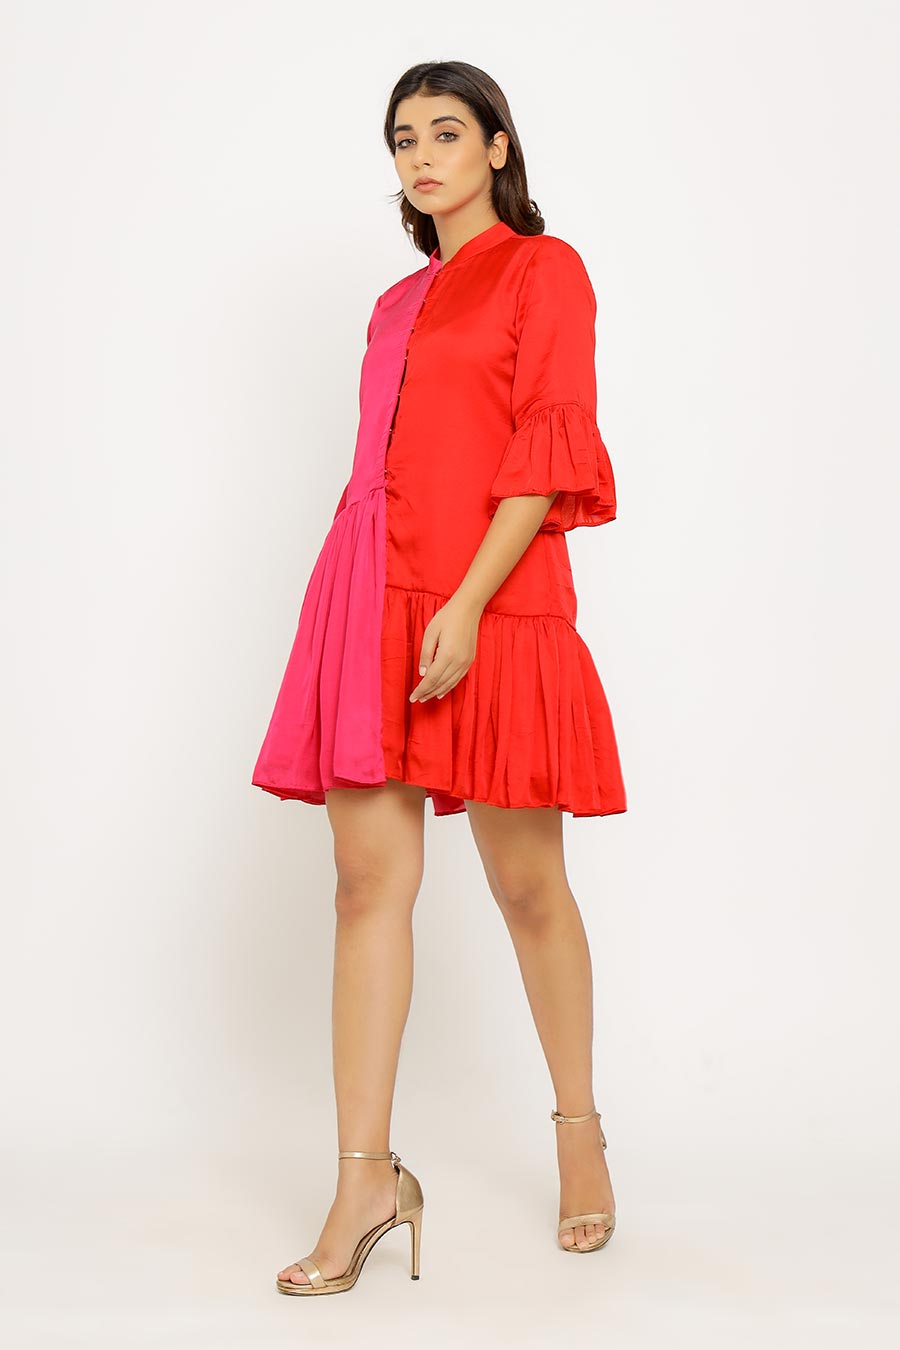 Red & Pink Half & Half Short Dress